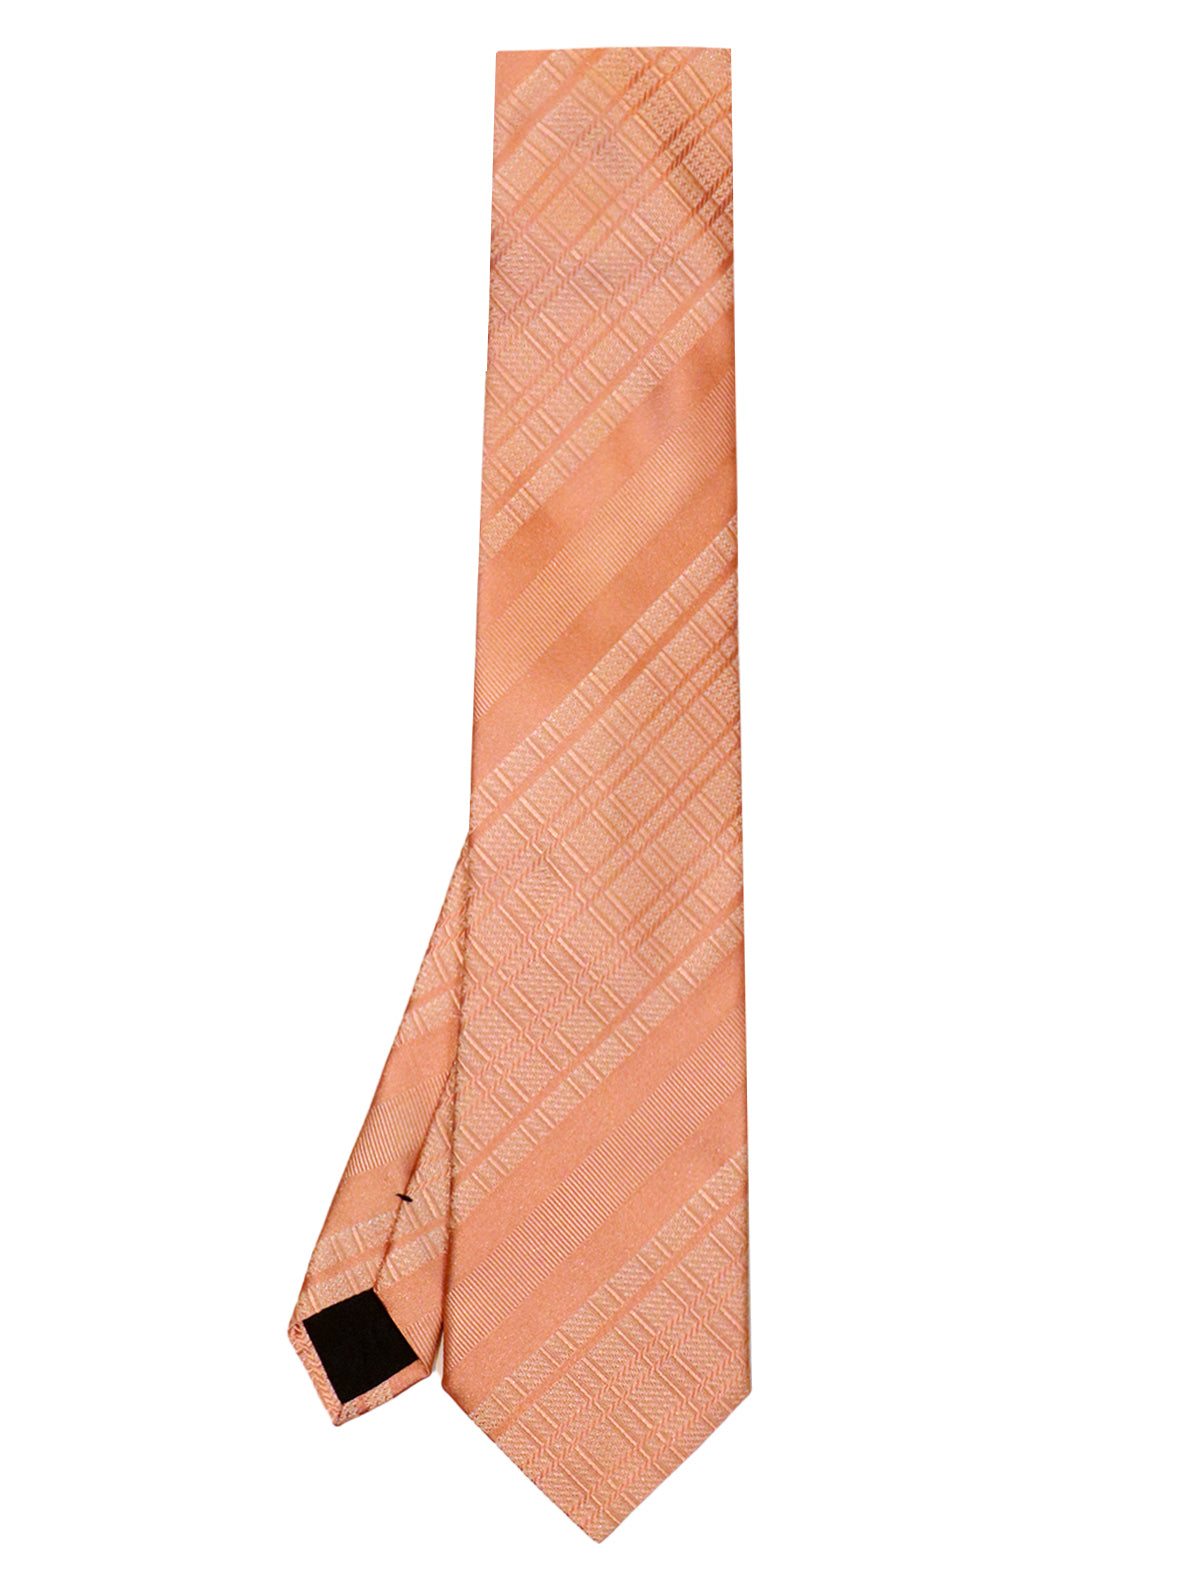 GABRIELE PASINI Italian Silk Tie in Vintage Pink